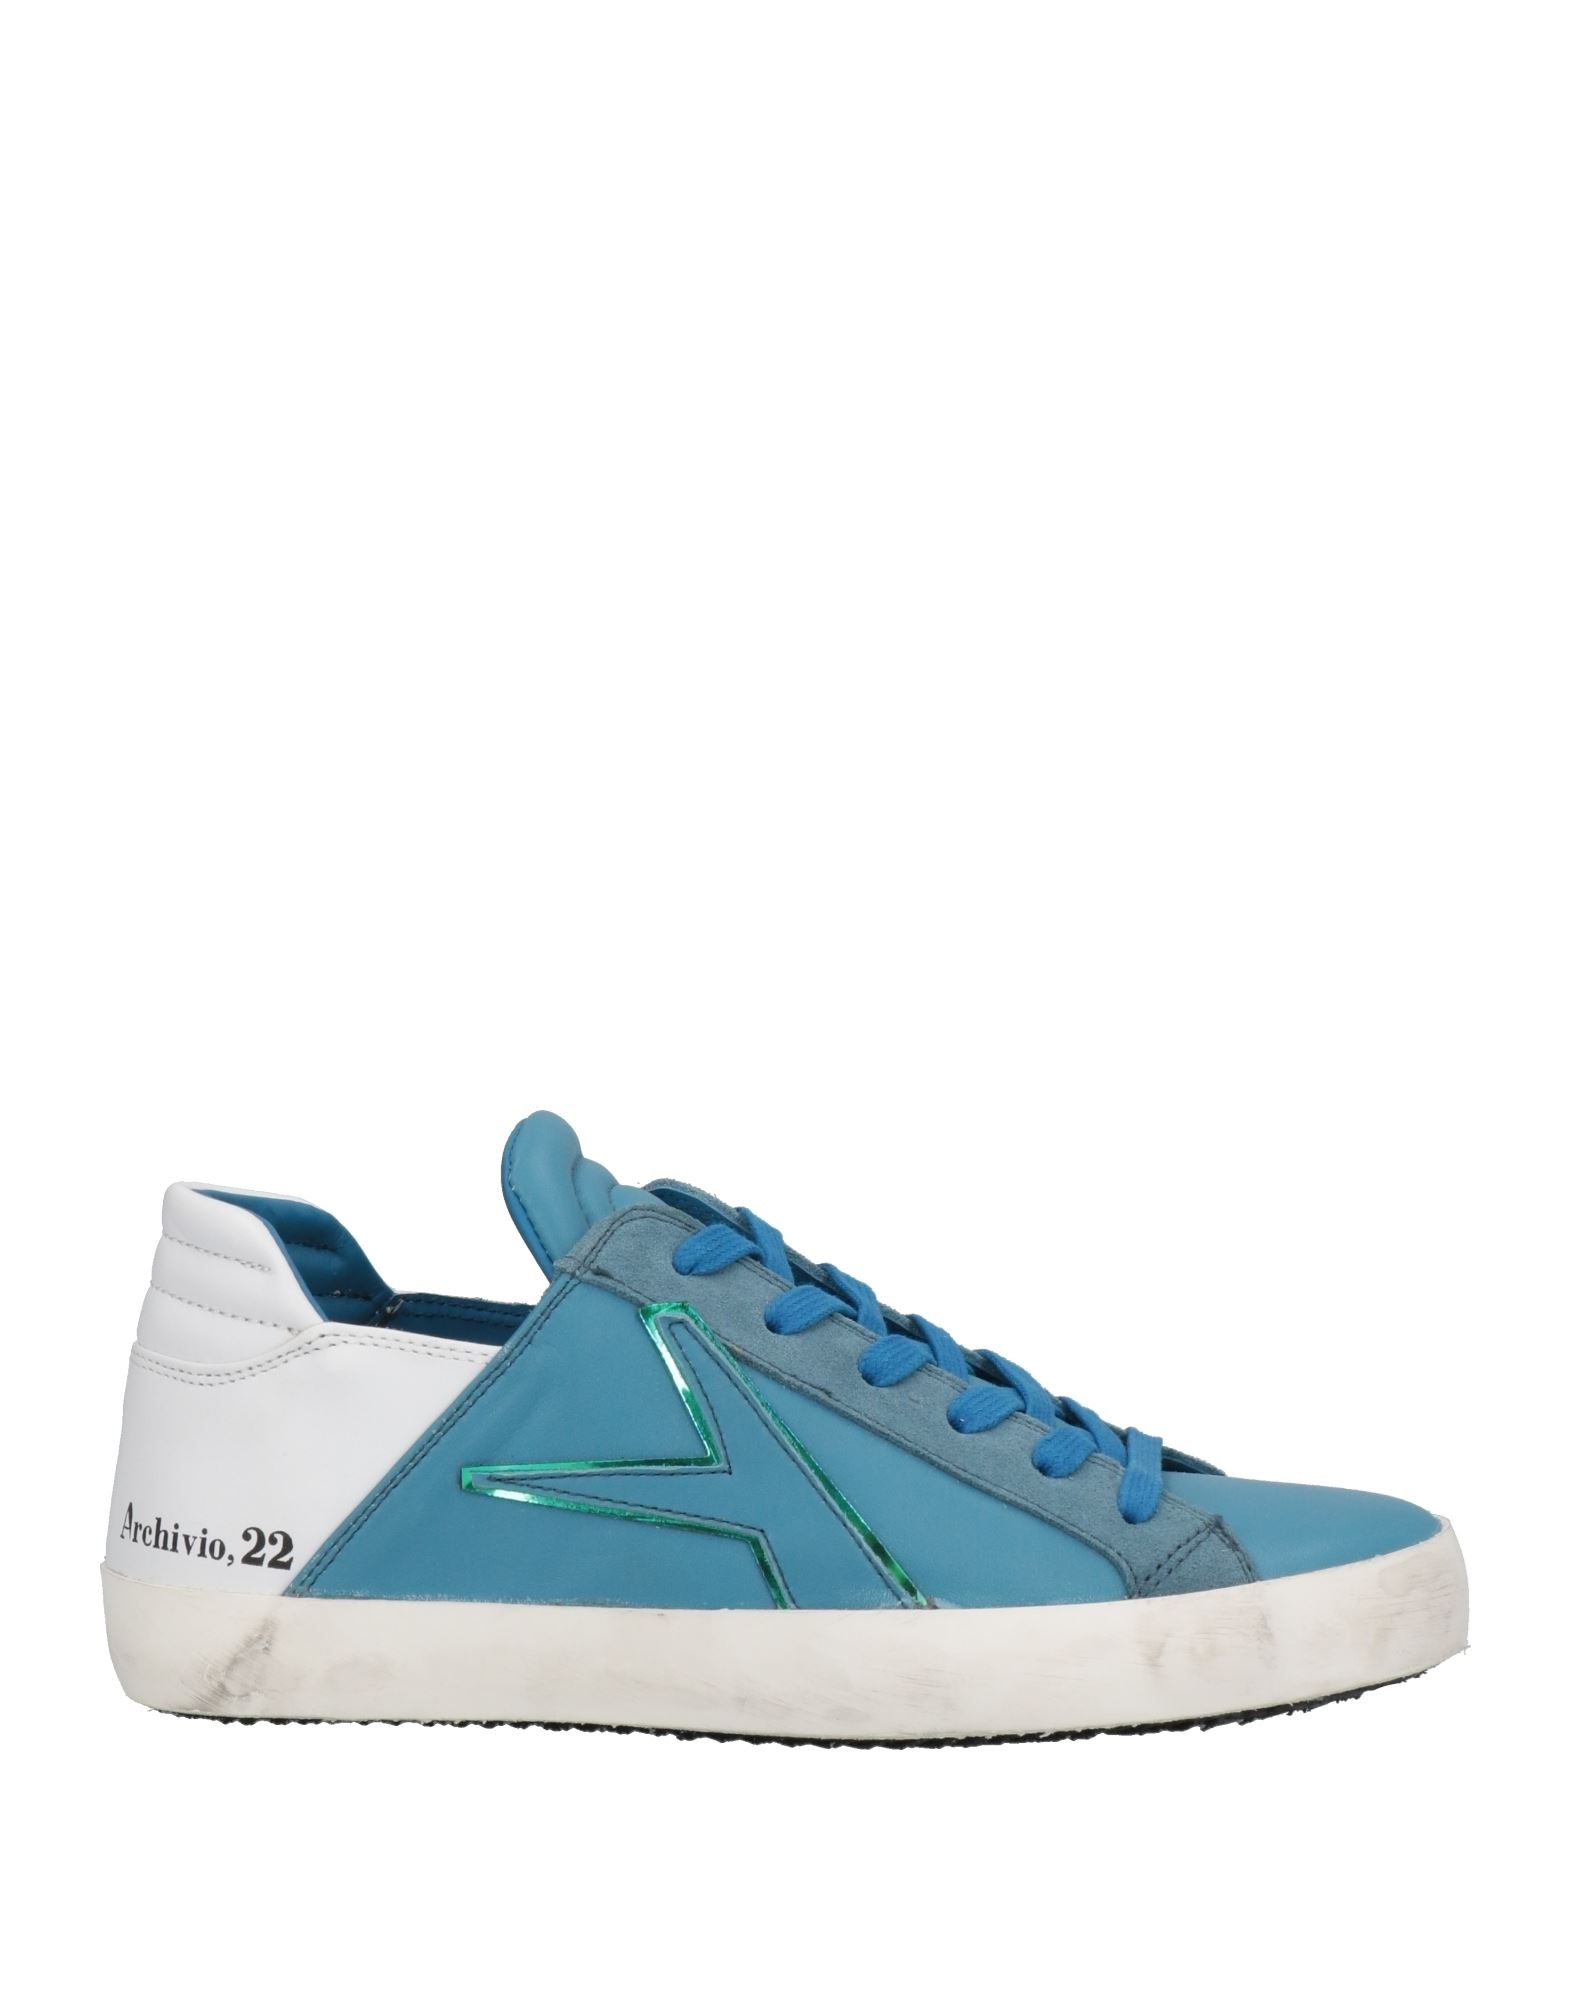 Archivio,22 Sneakers In Blue